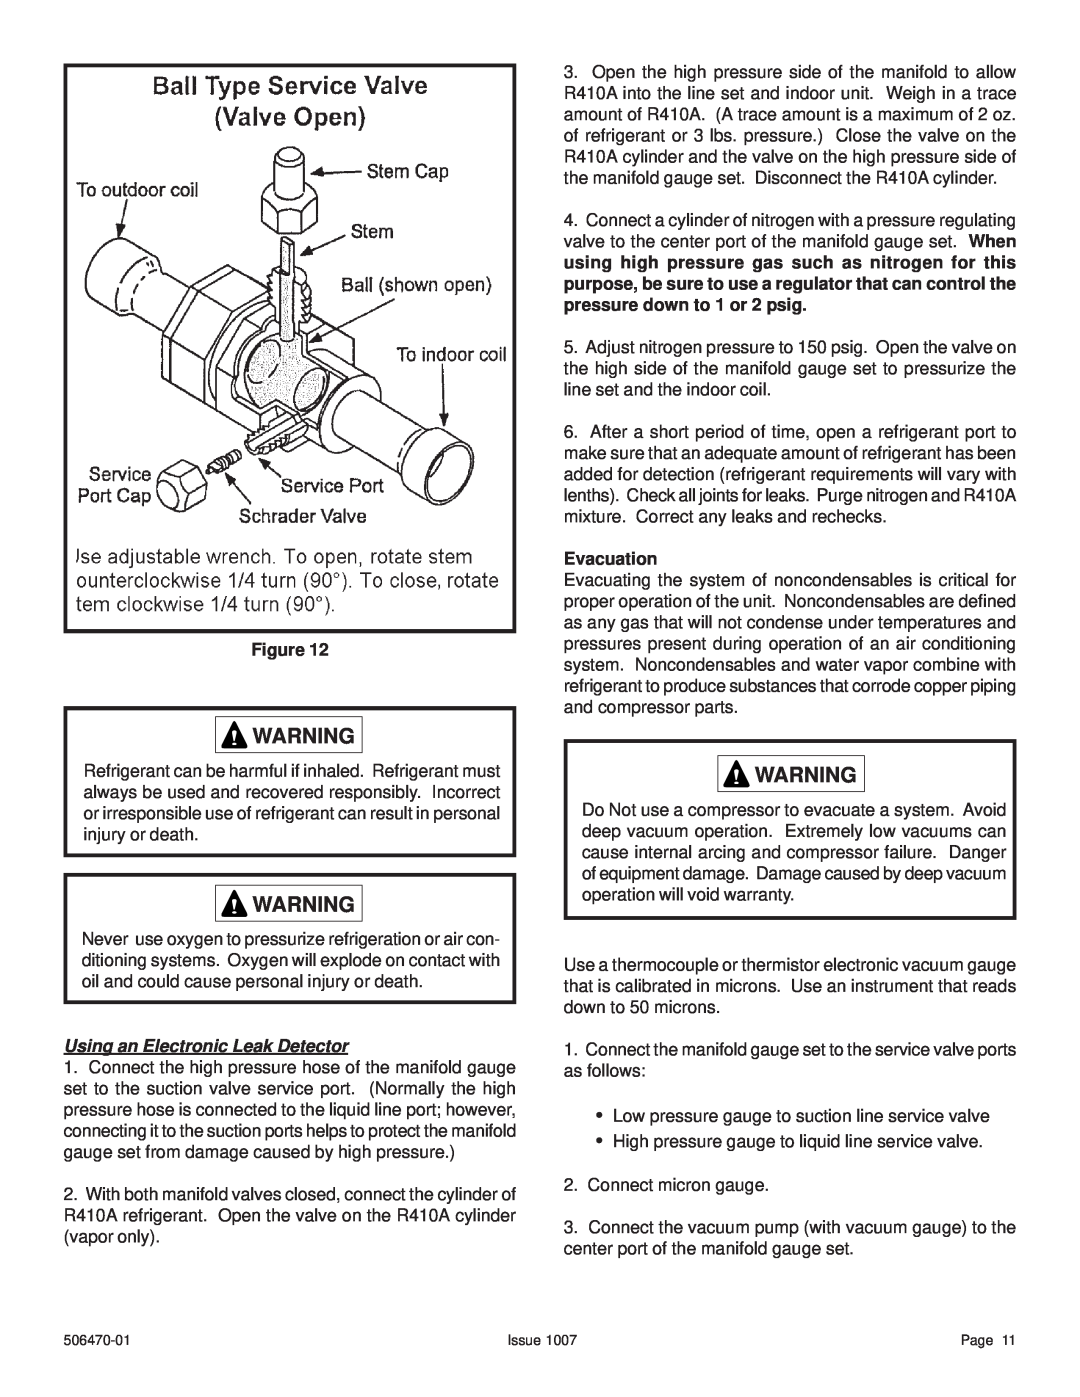 Lennox International Inc 4HP18LT manual Using an Electronic Leak Detector, Evacuation 